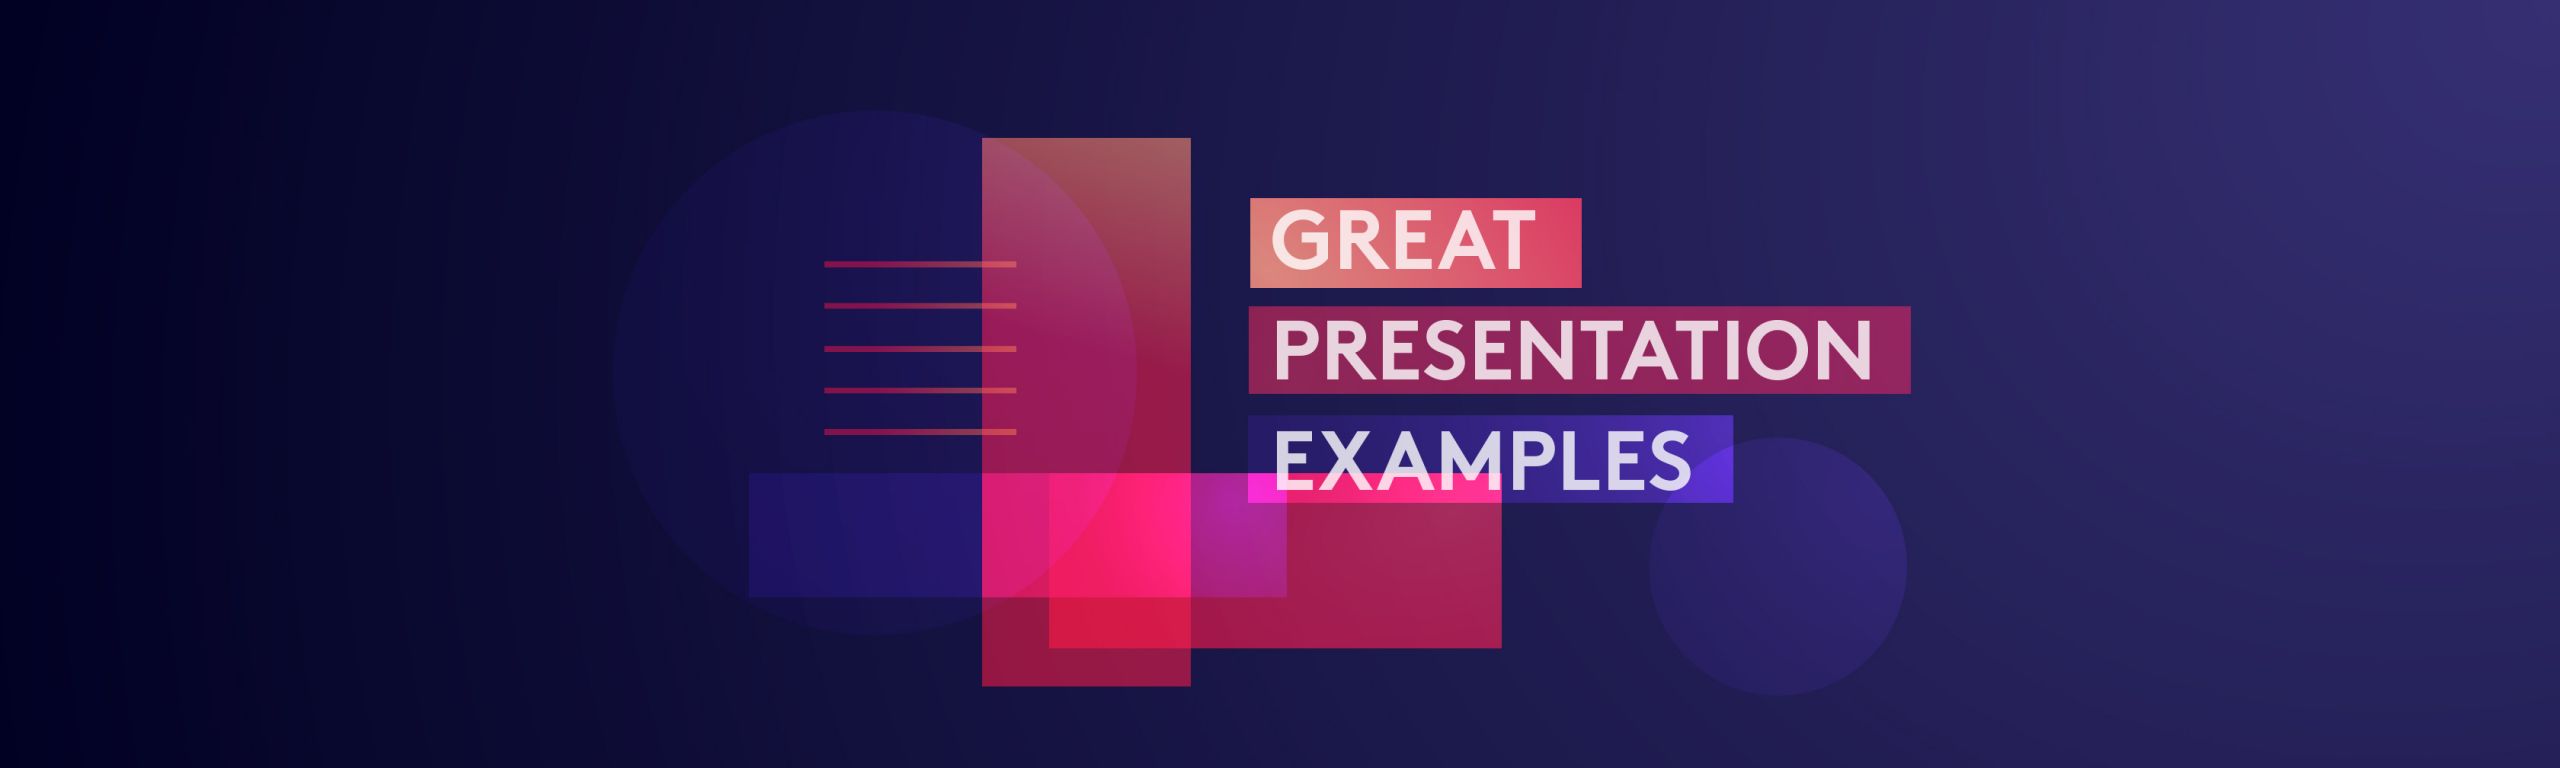 Presentation-Examples-BG-2560x768-c-default